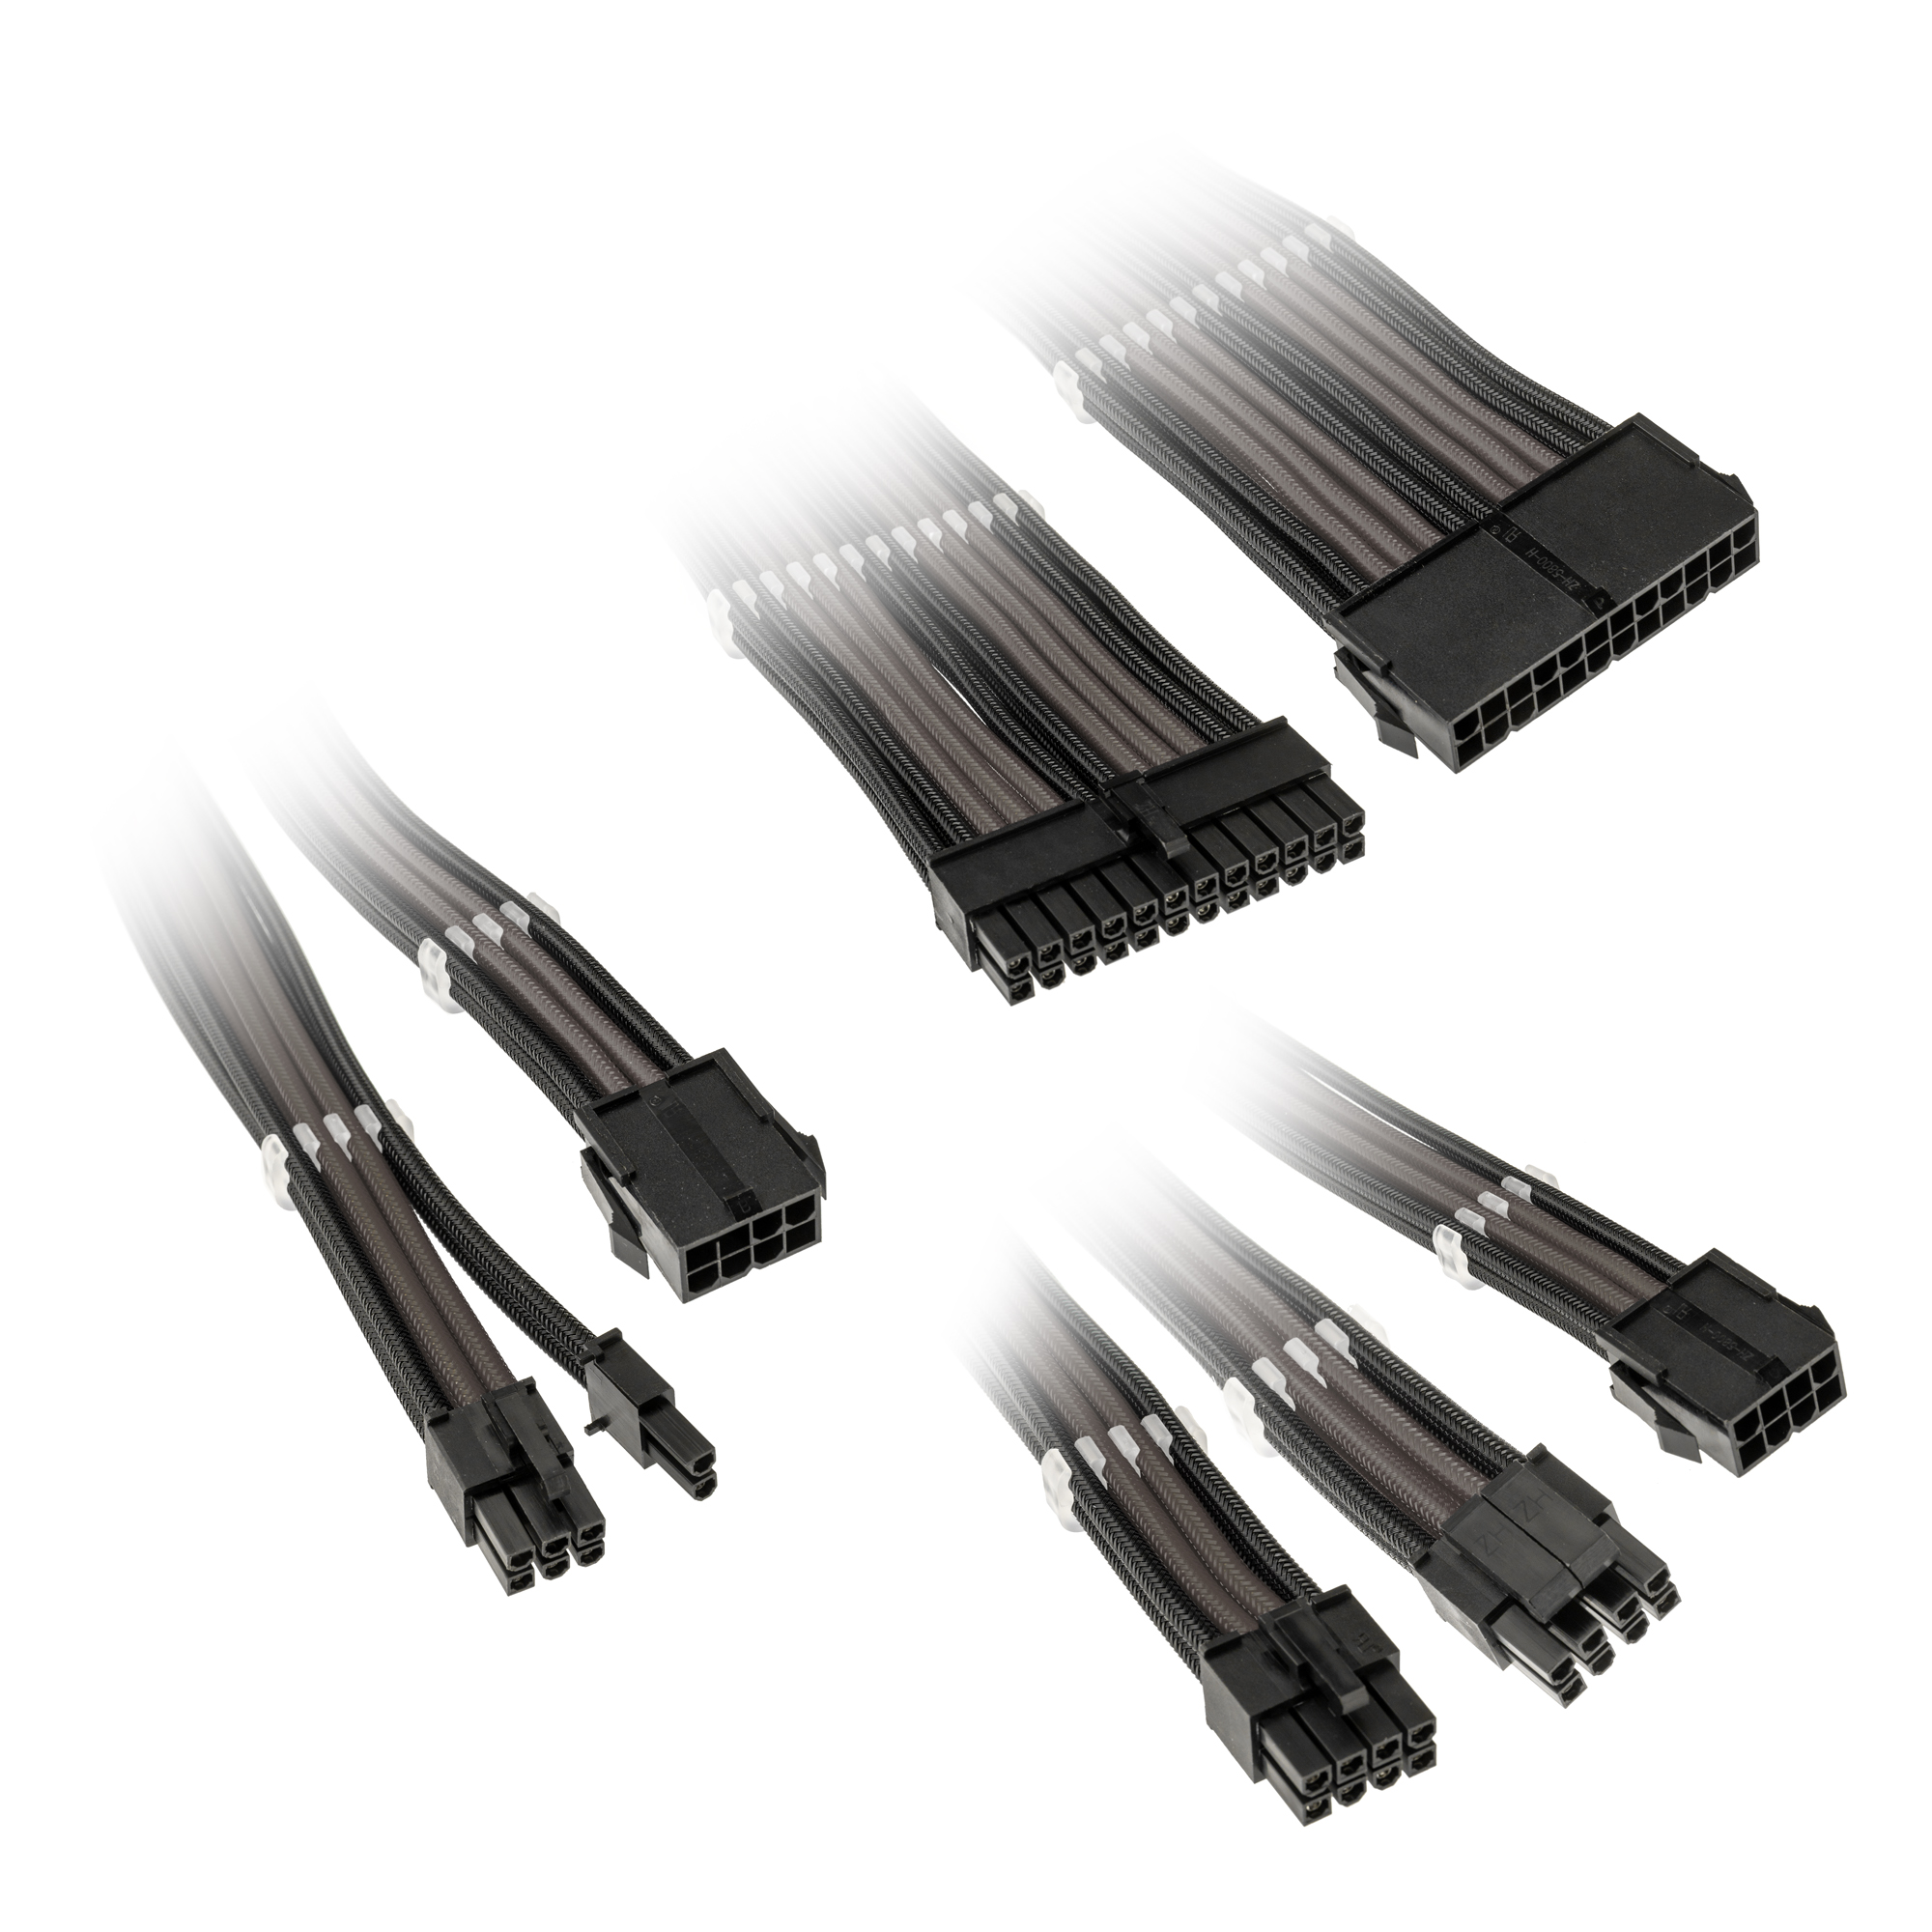 B Grade Kolink Core Adept Braided Cable Extension Kit - Jet Black/Gunmetal Grey